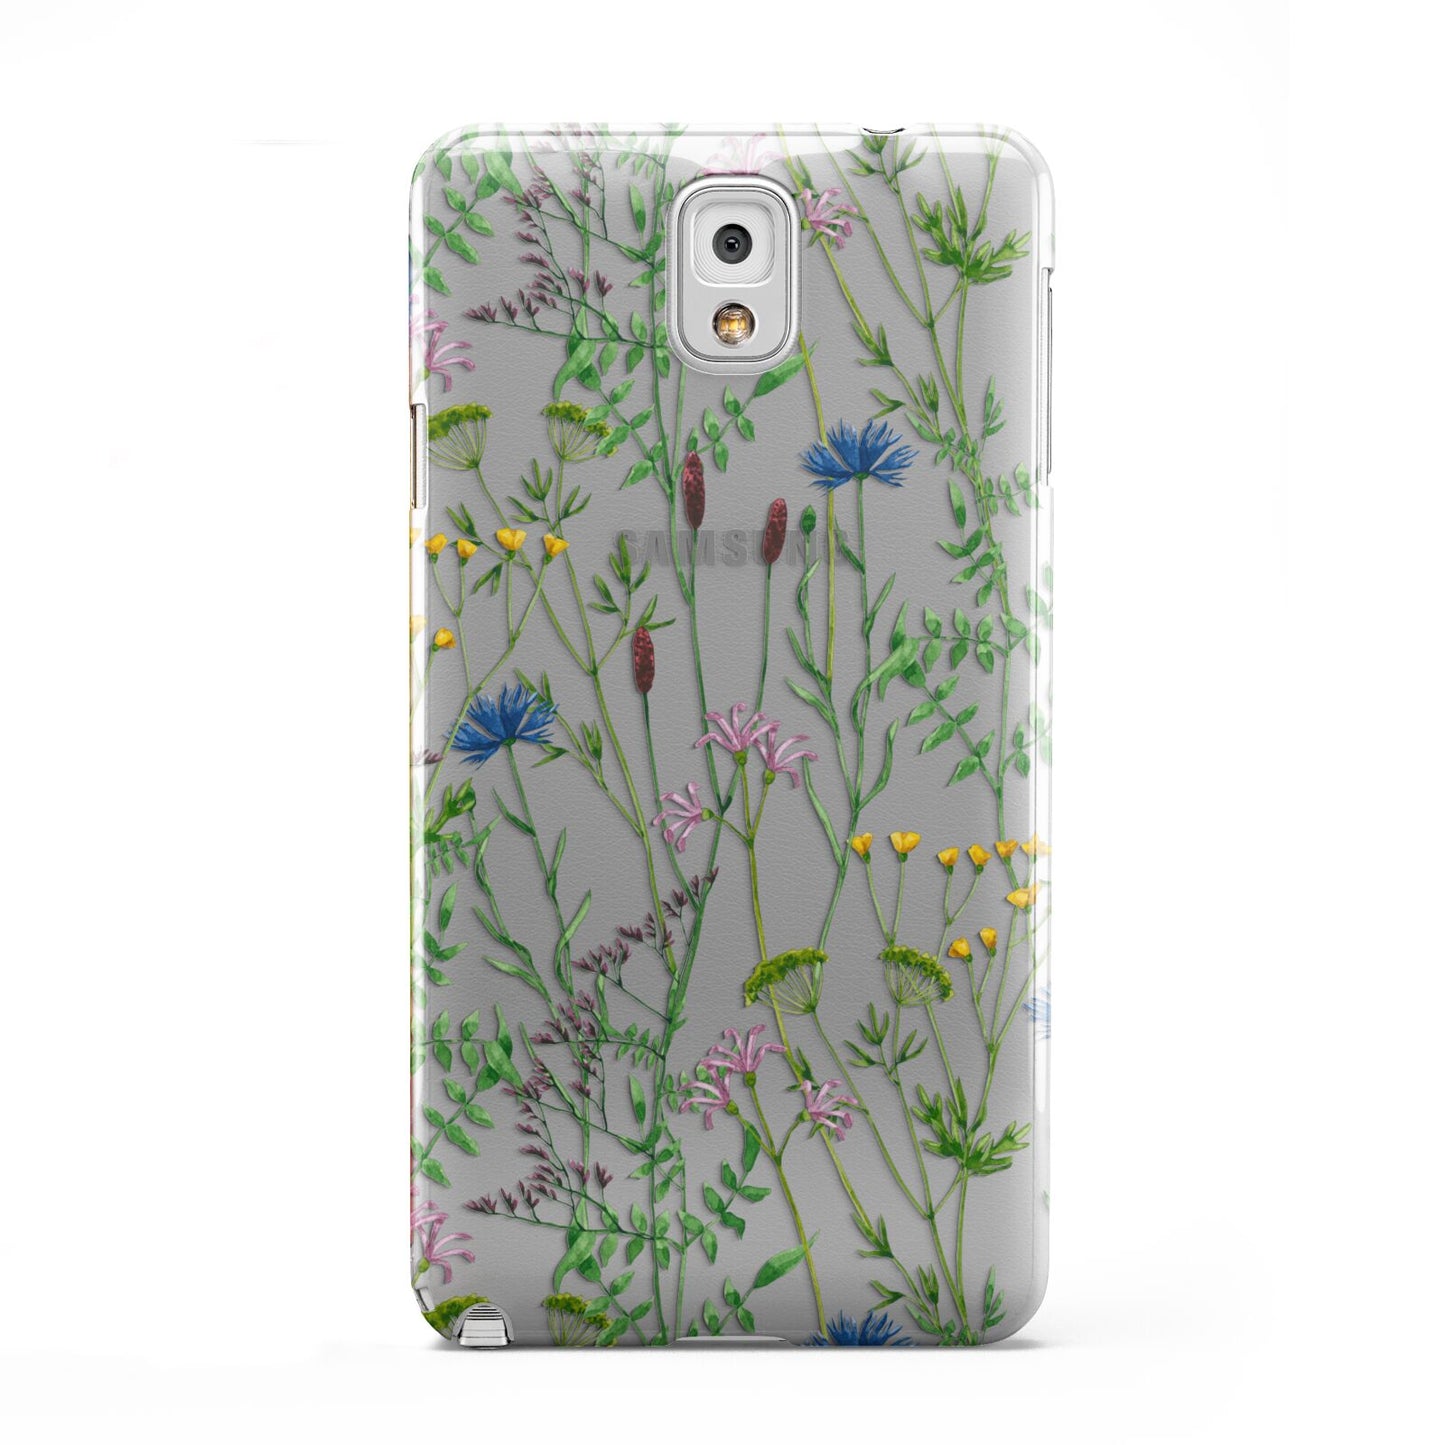 Wildflowers Samsung Galaxy Note 3 Case